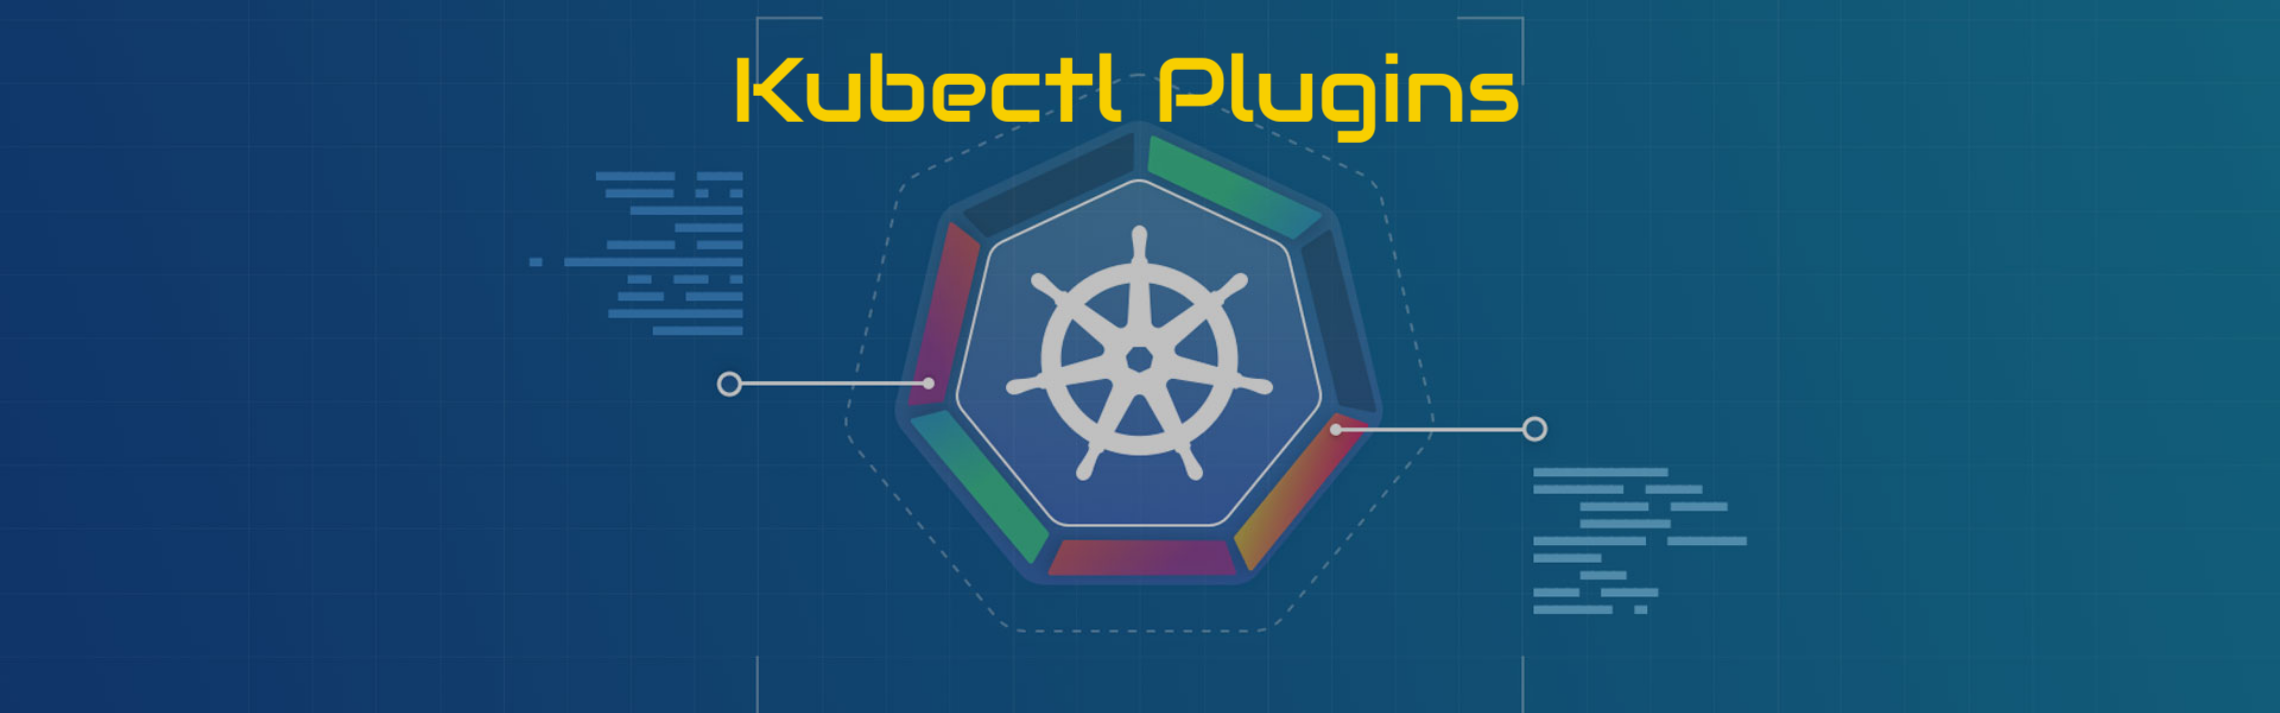 kubectl-plugins